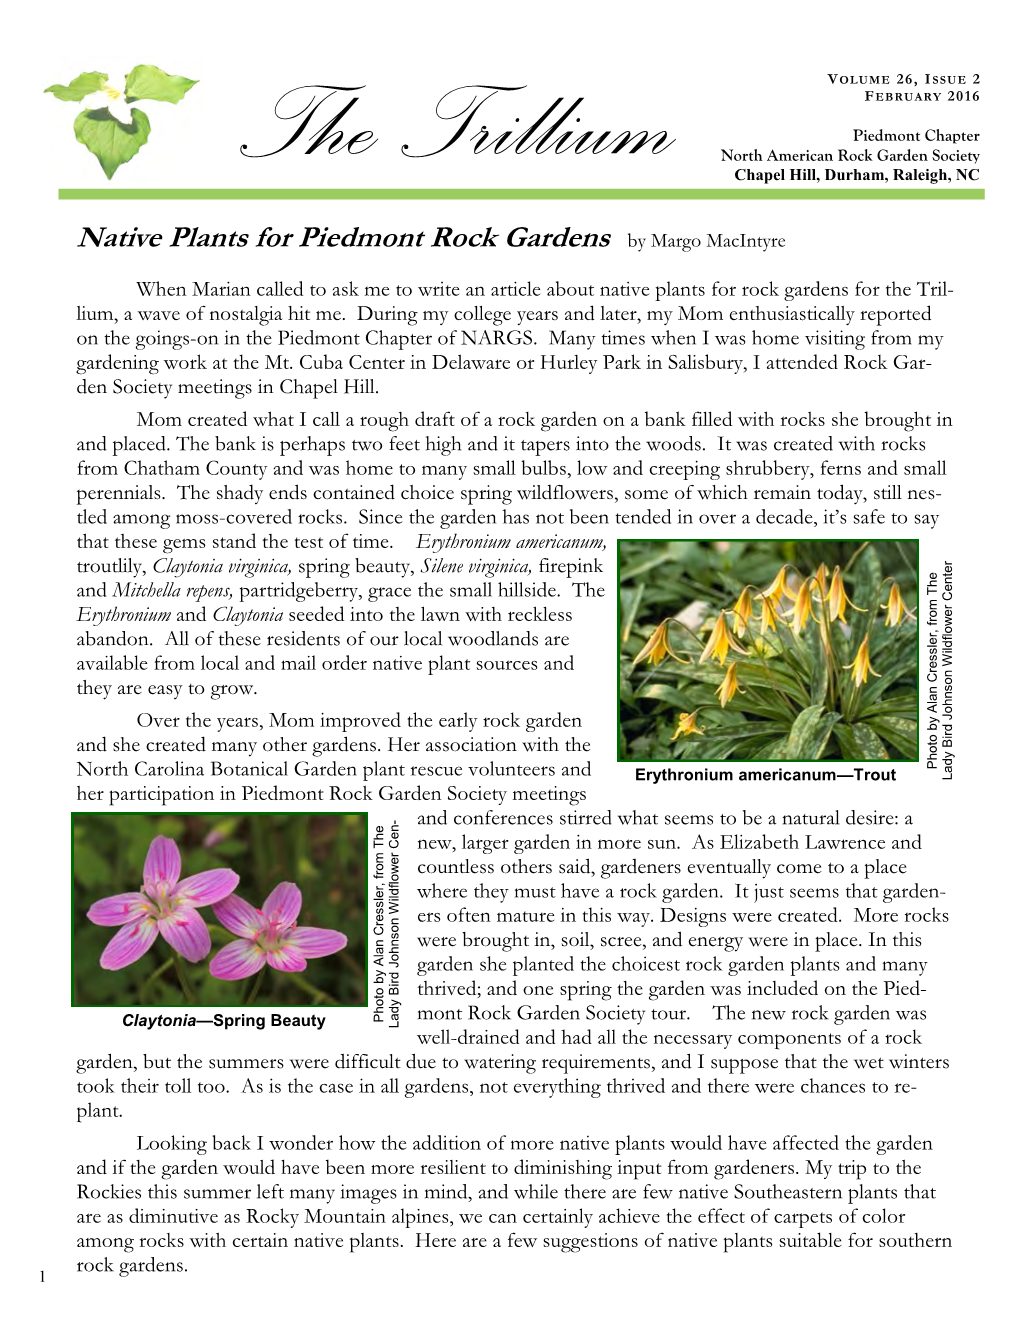 Native Plants for Piedmont Rock Gardens by Margo Macintyre